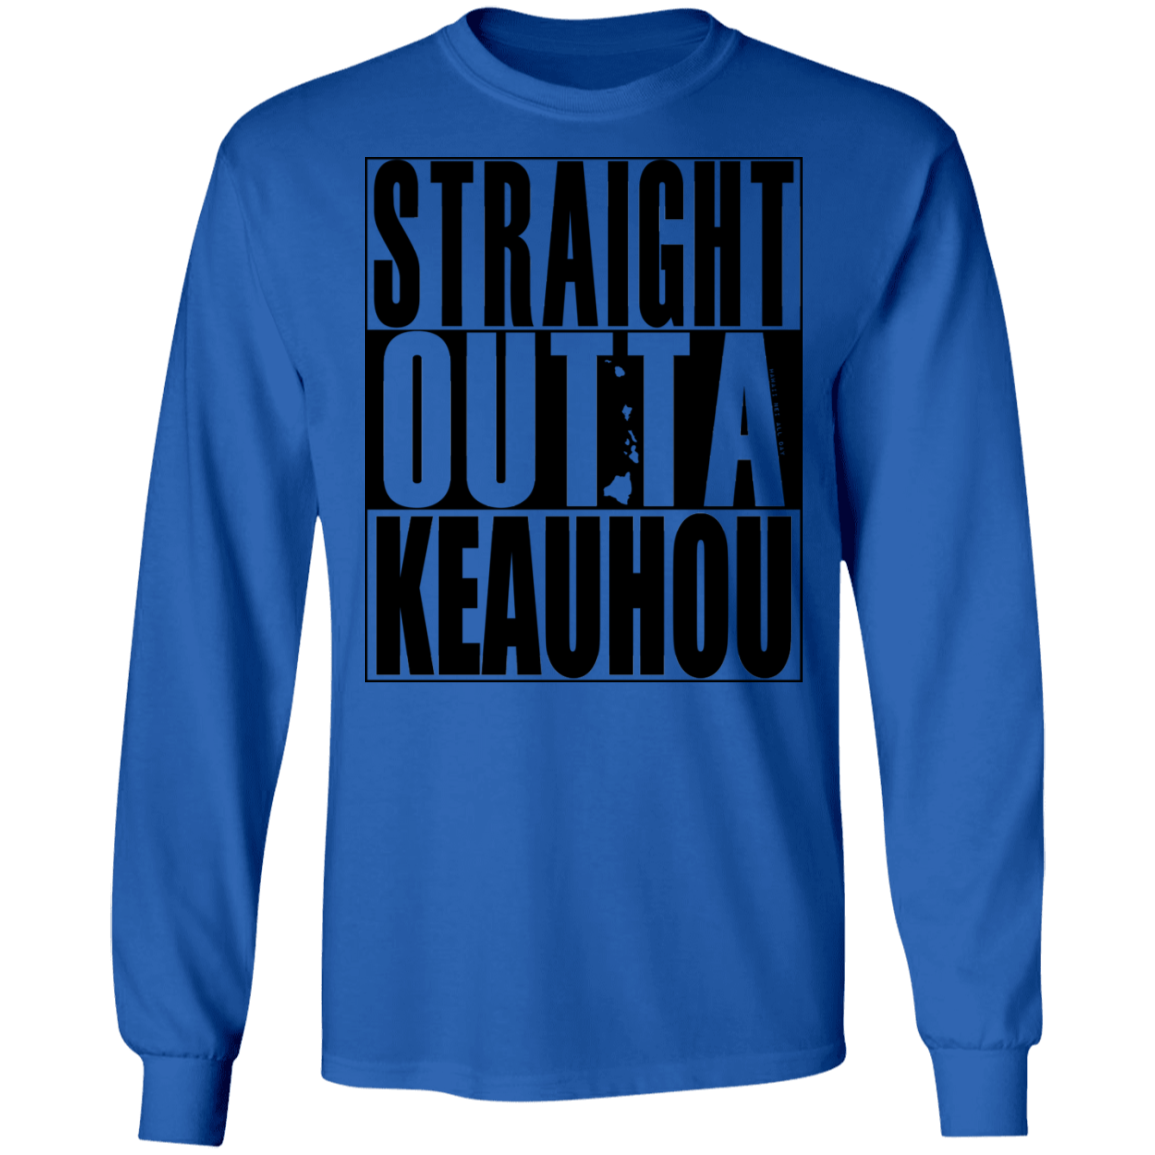 Straight Outta Keauhou (black ink) LS T-Shirt